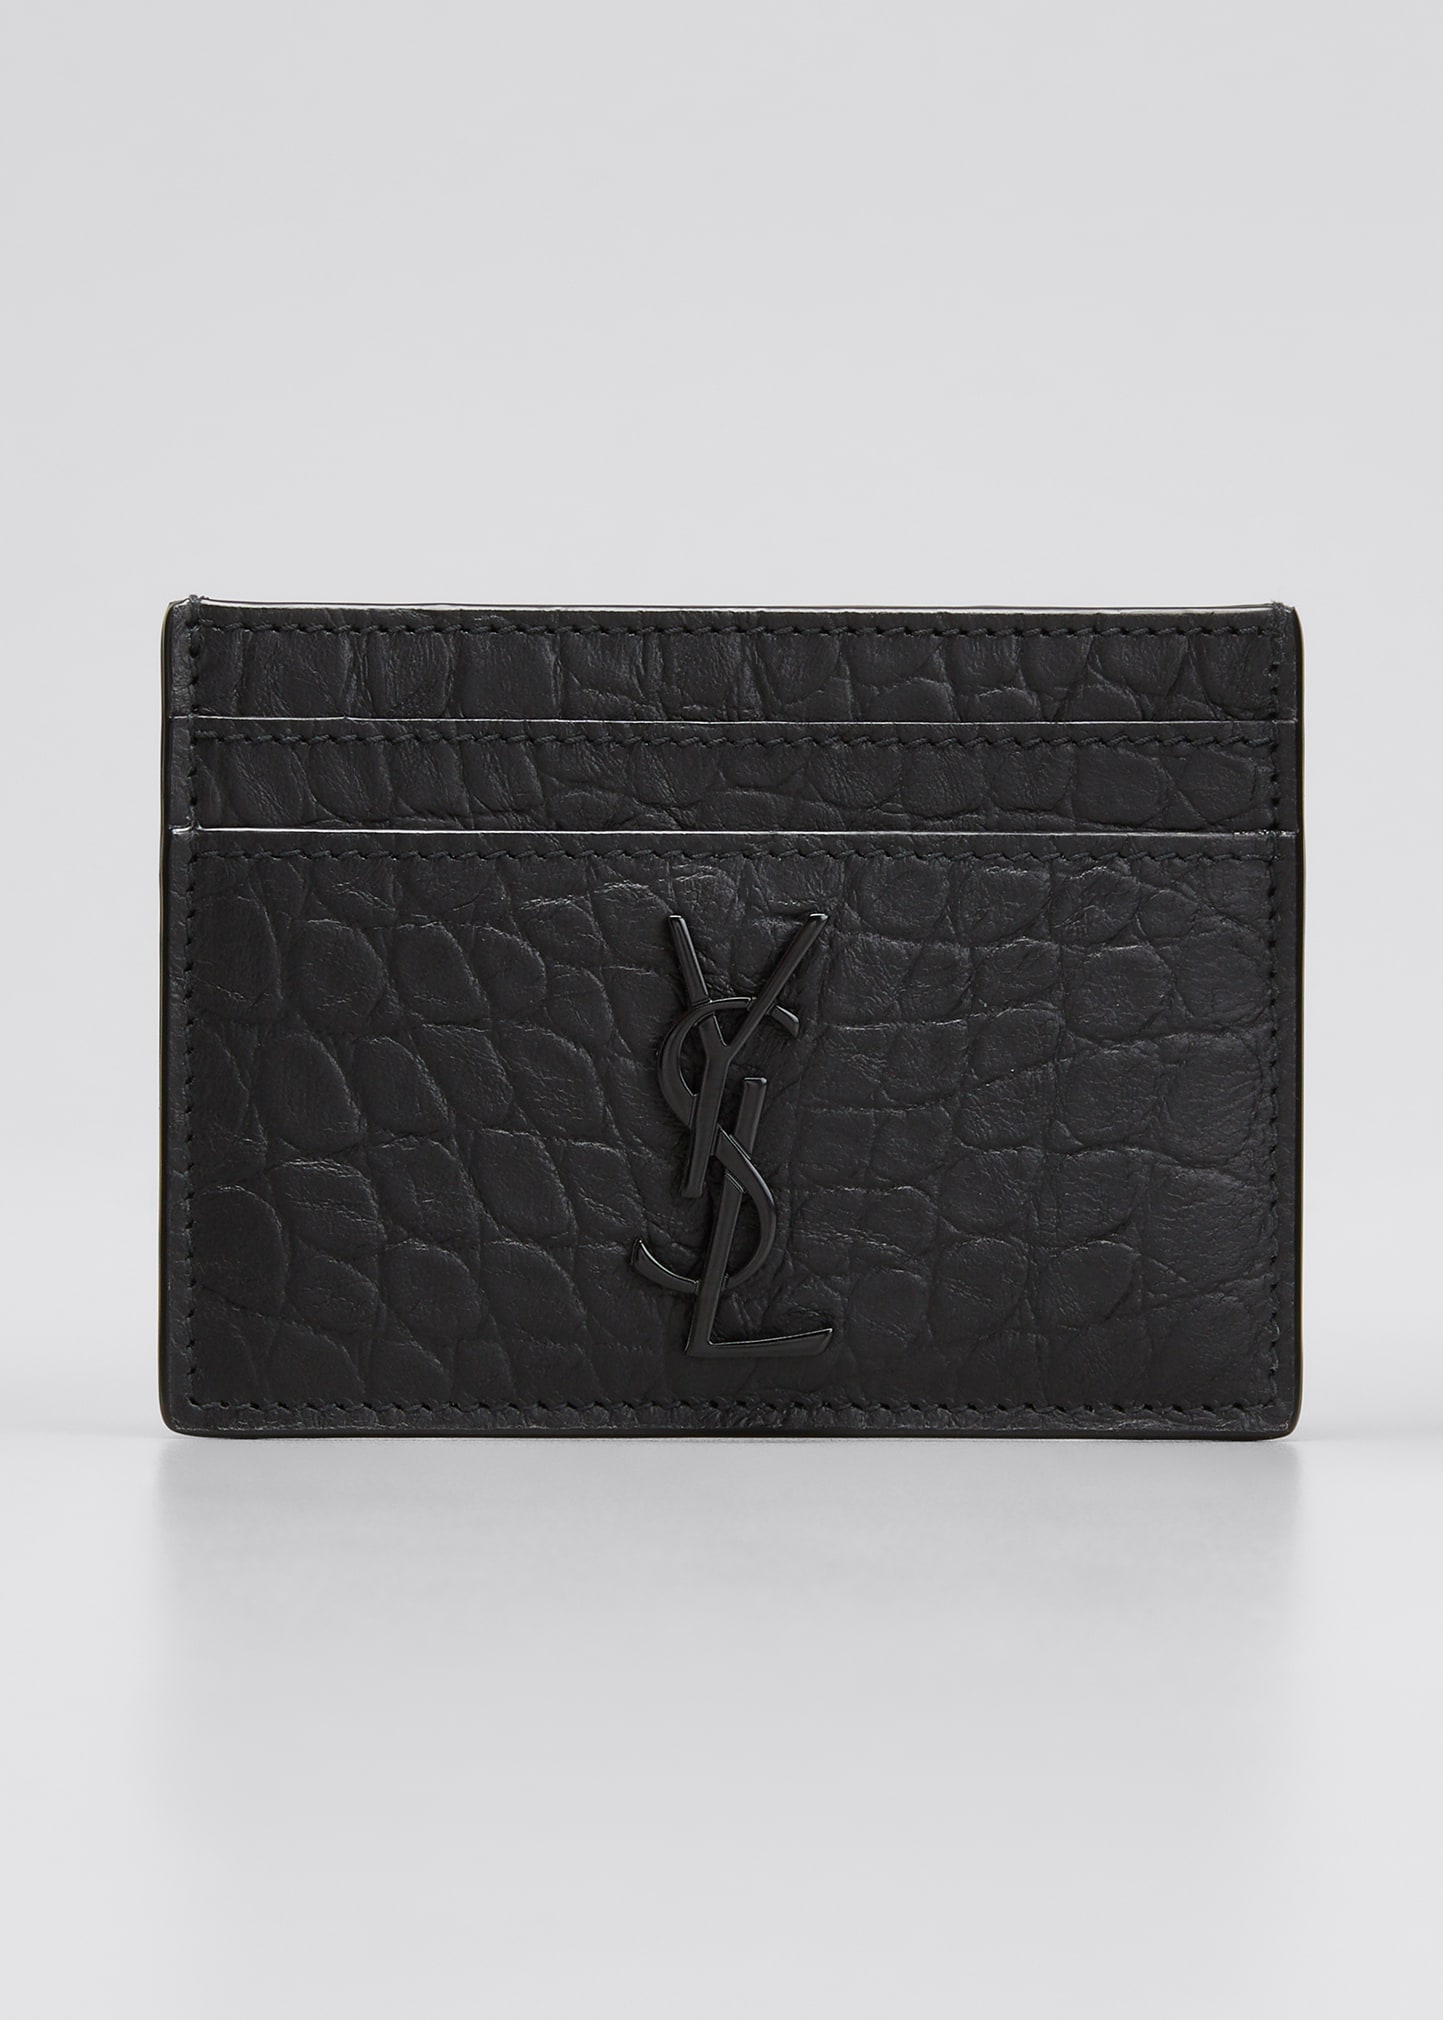 Card holder leather black GFX-10003-10-01